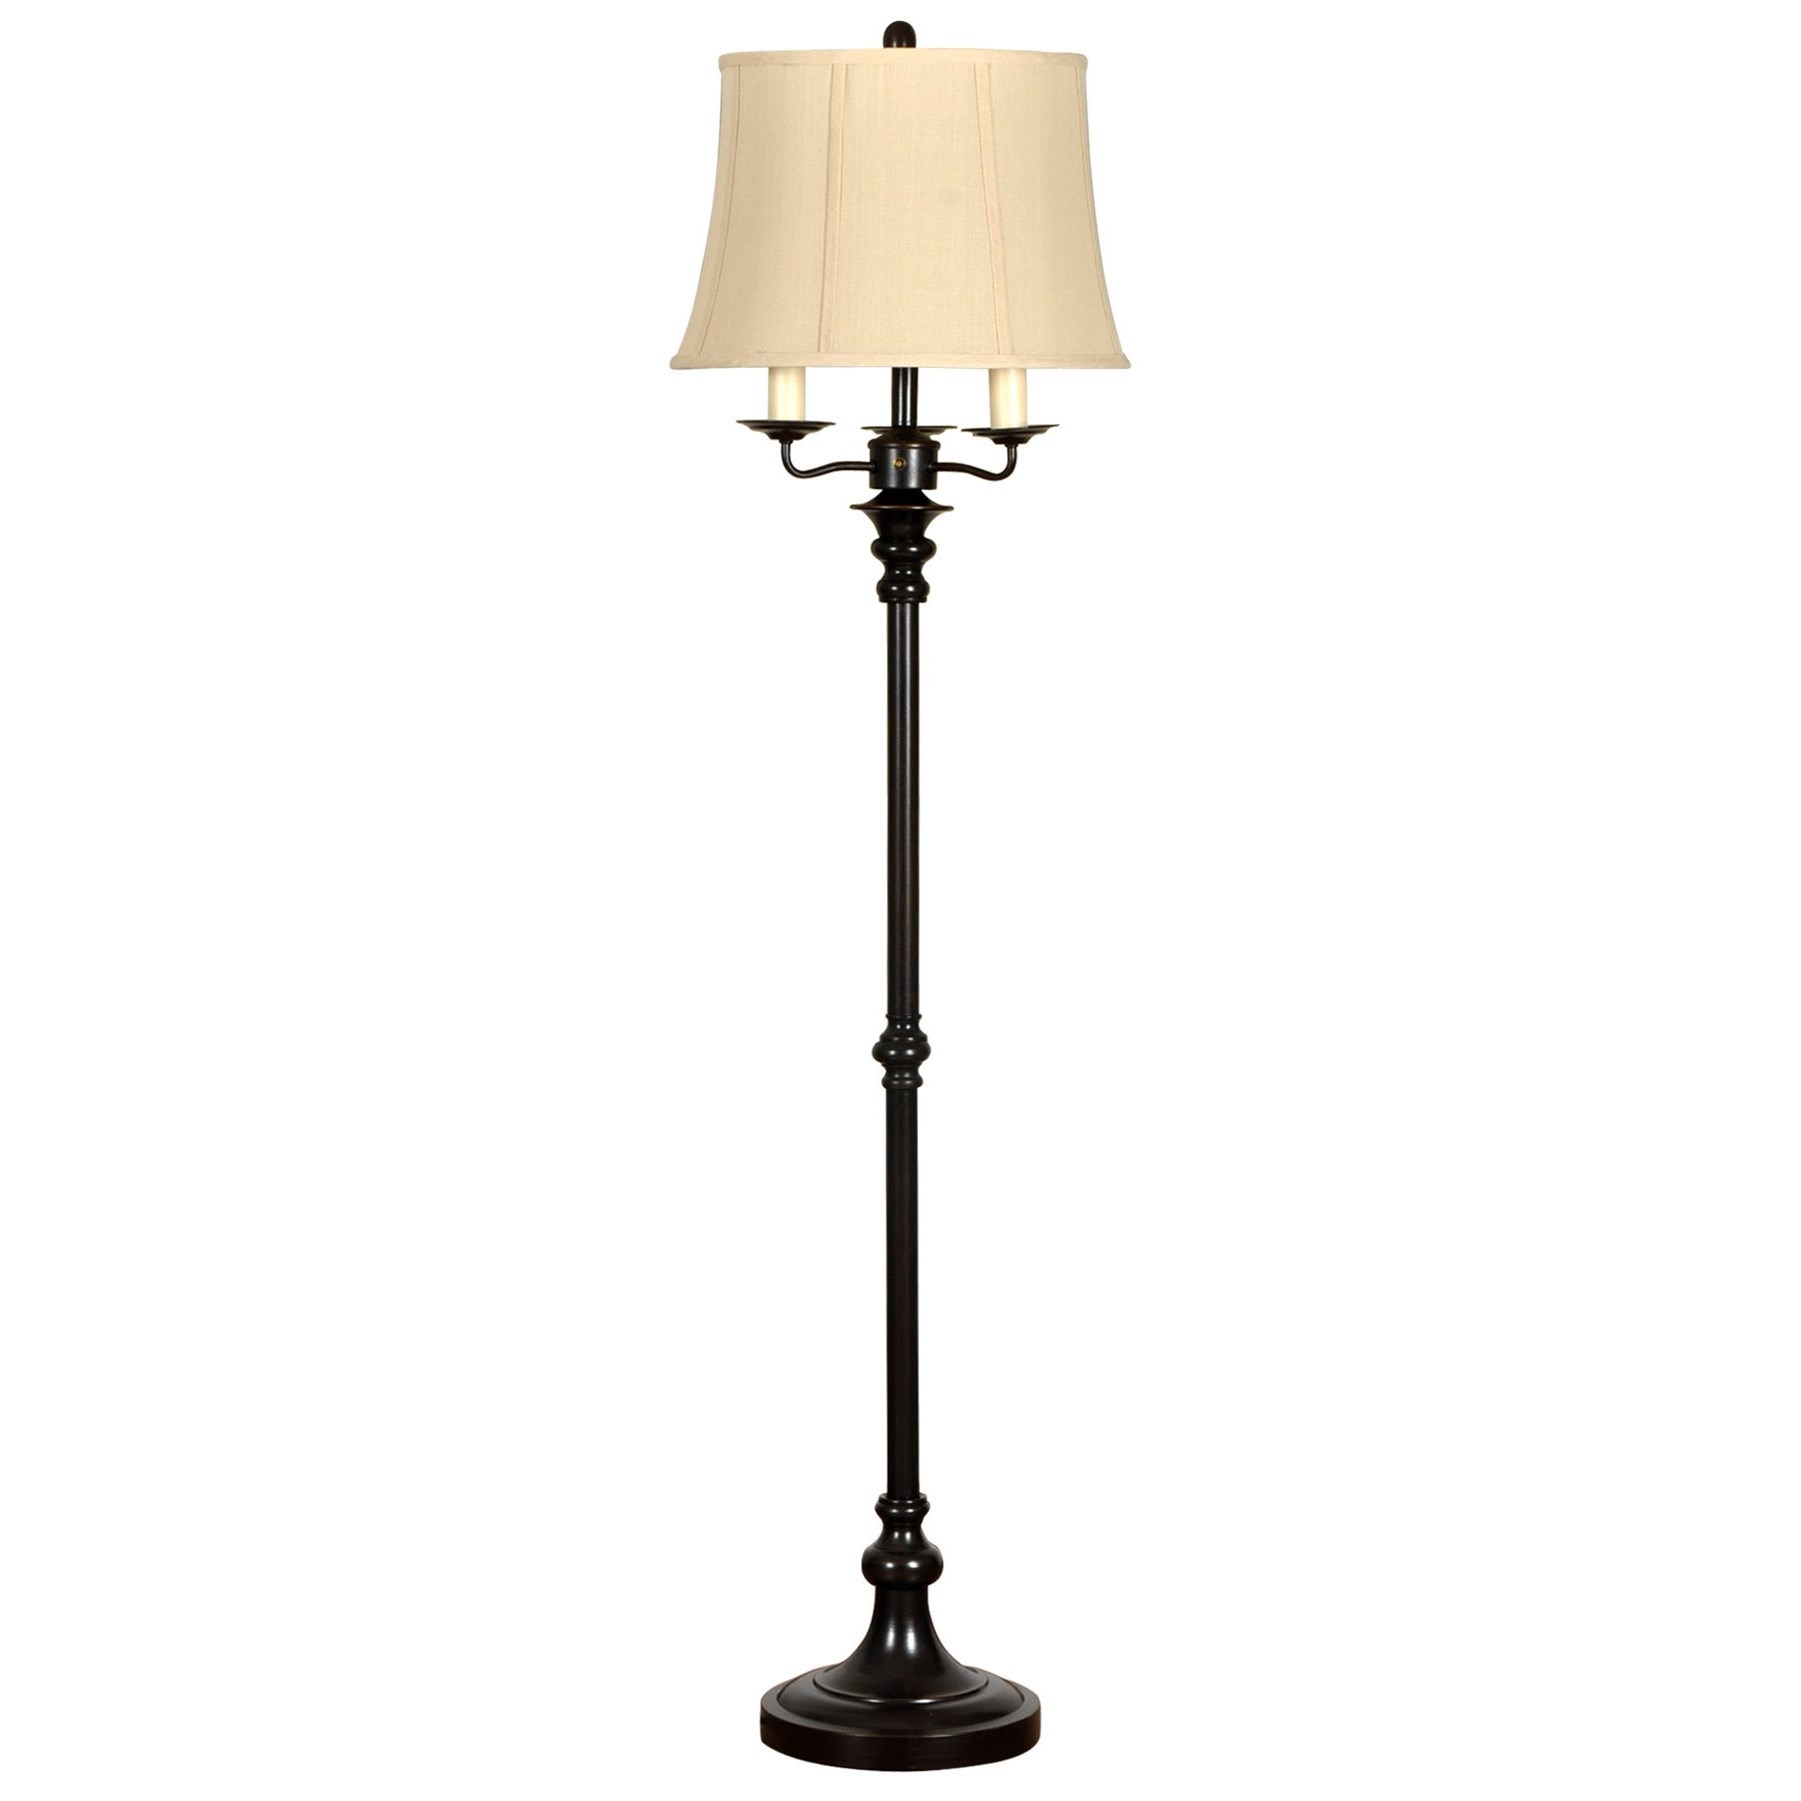 Traditional 6-Way Floor Lamp